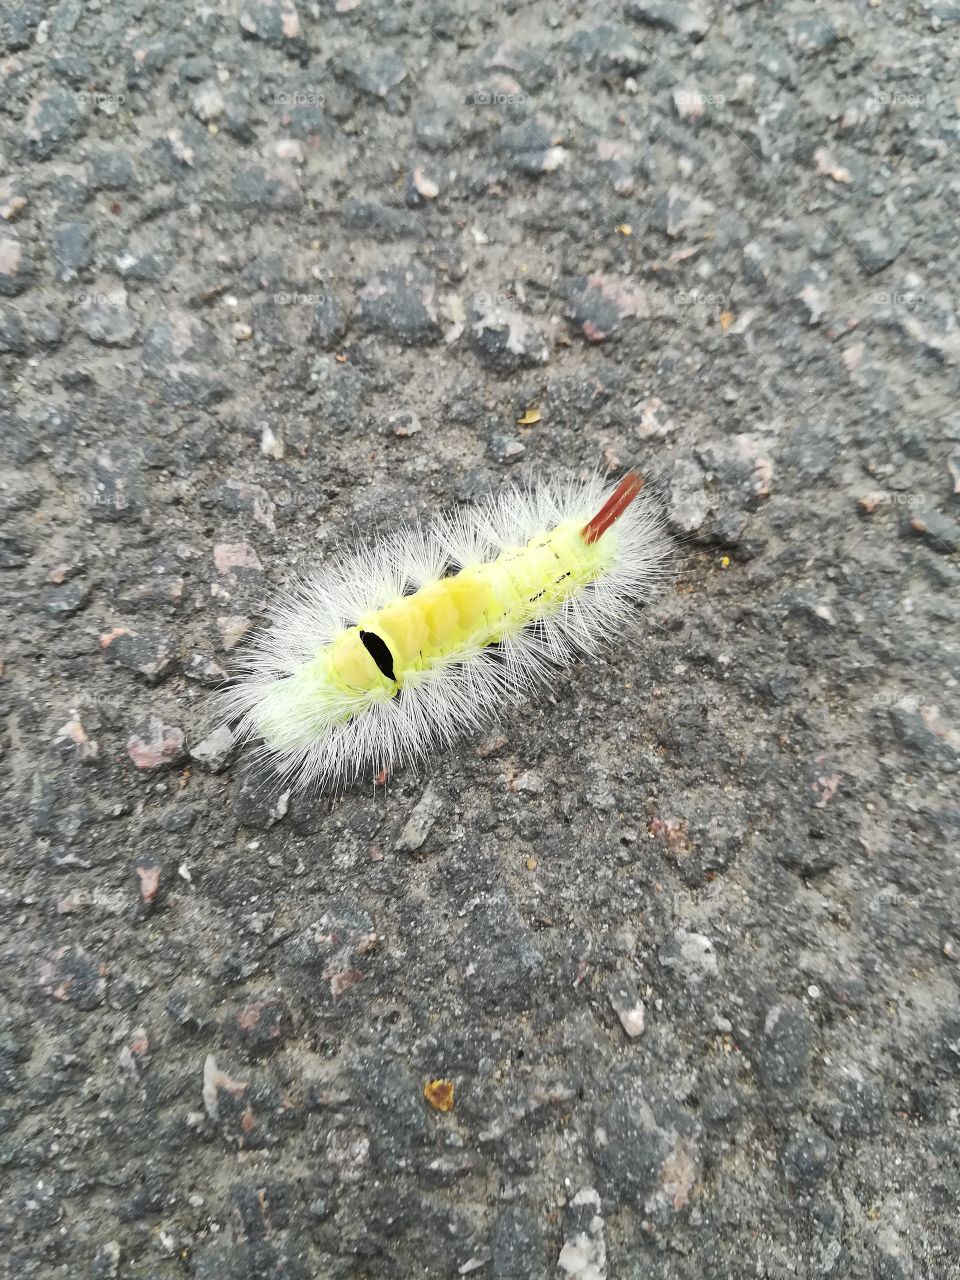 Tiny little caterpillar across the road